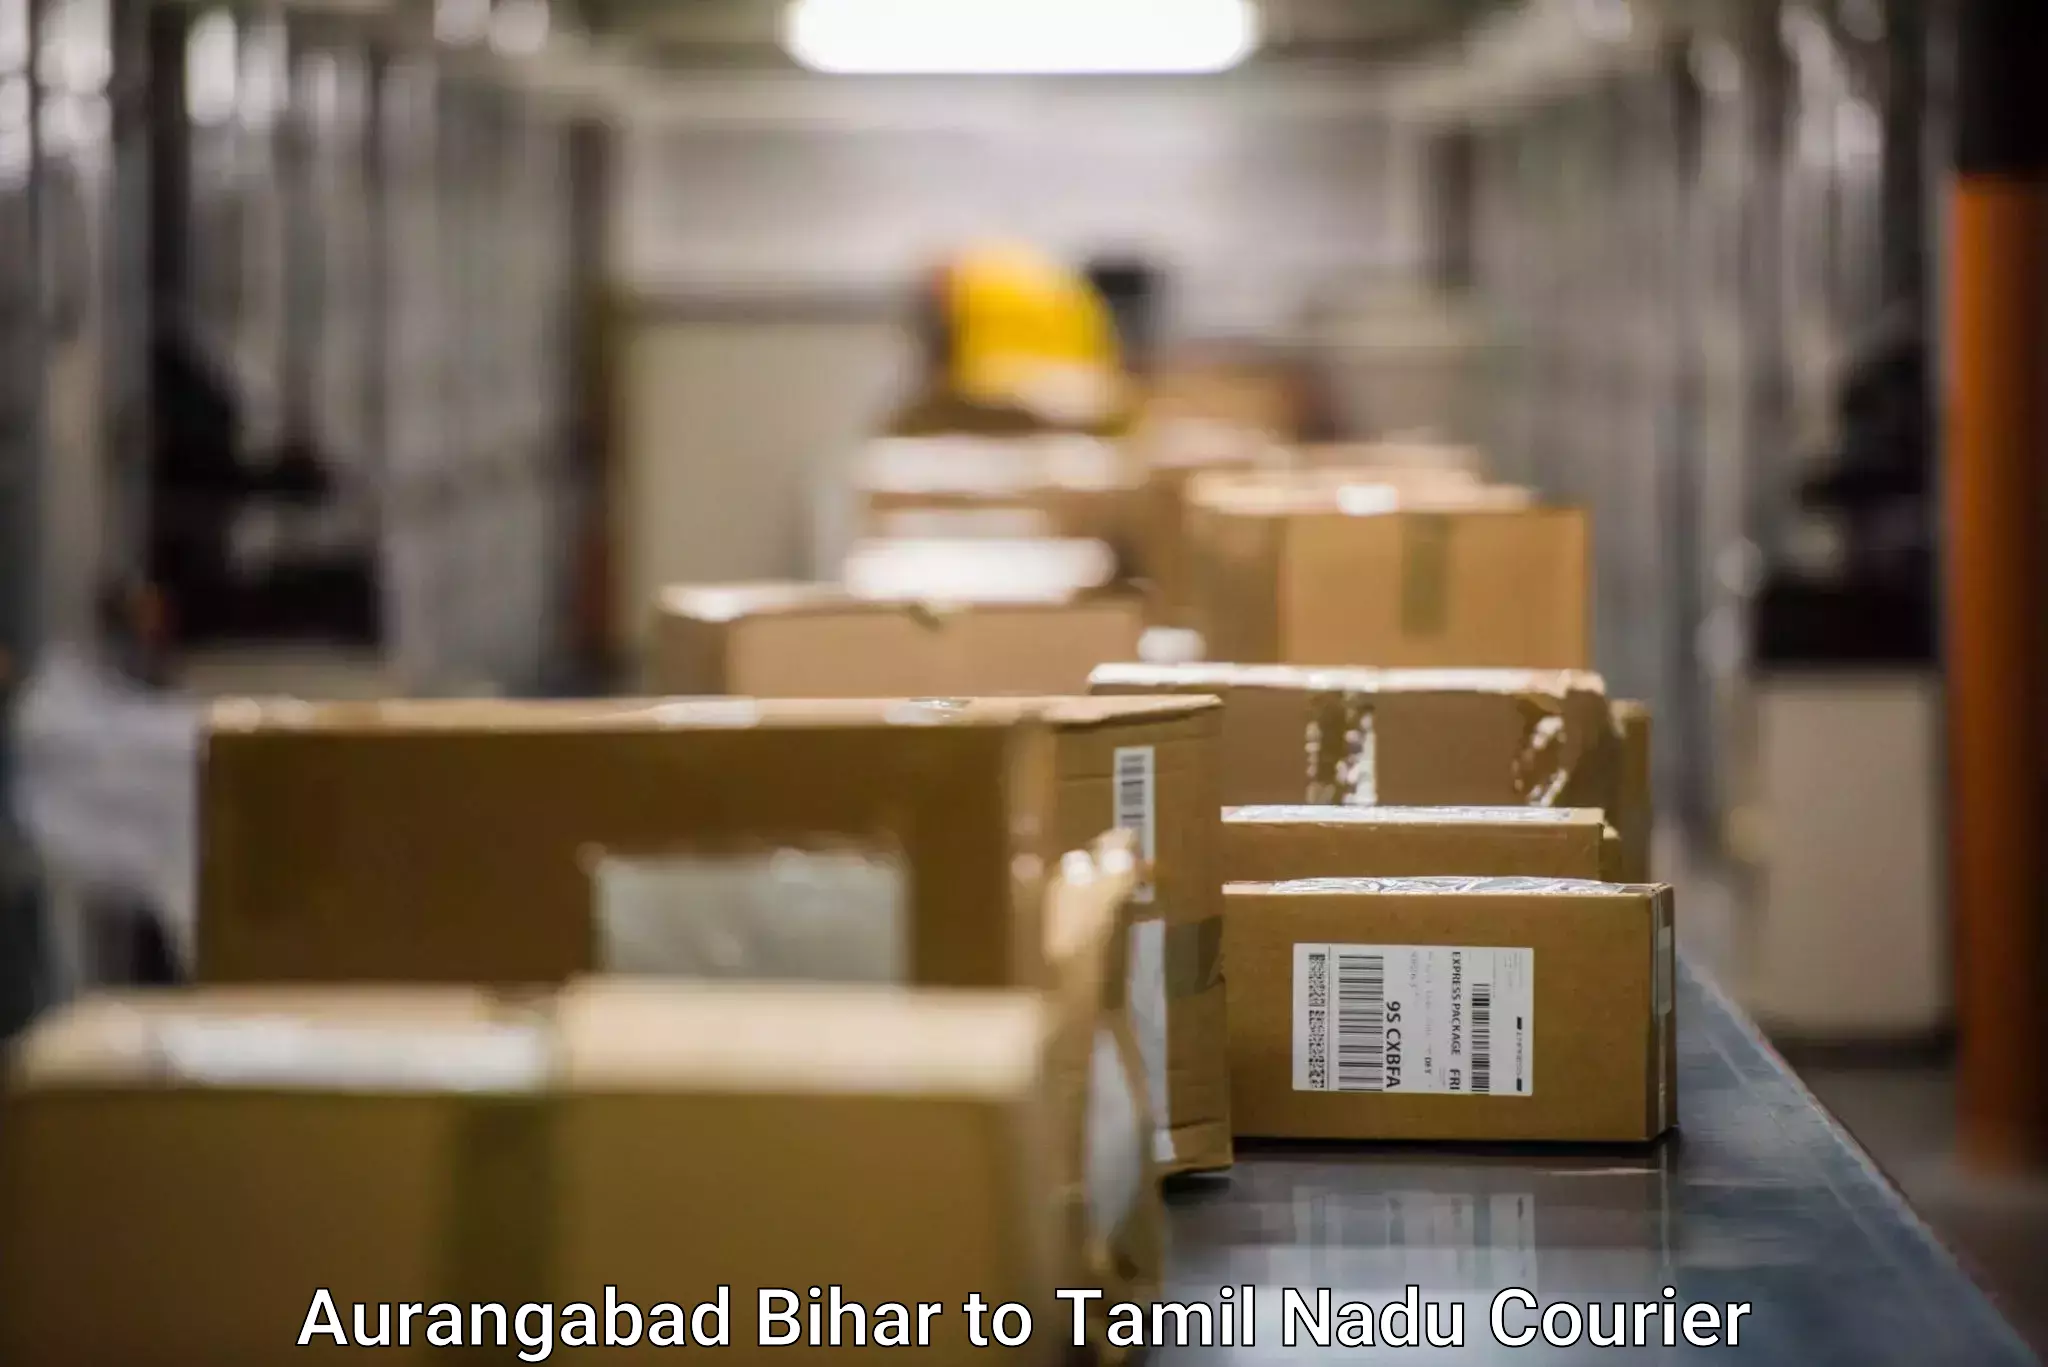 High-performance logistics Aurangabad Bihar to Tambaram